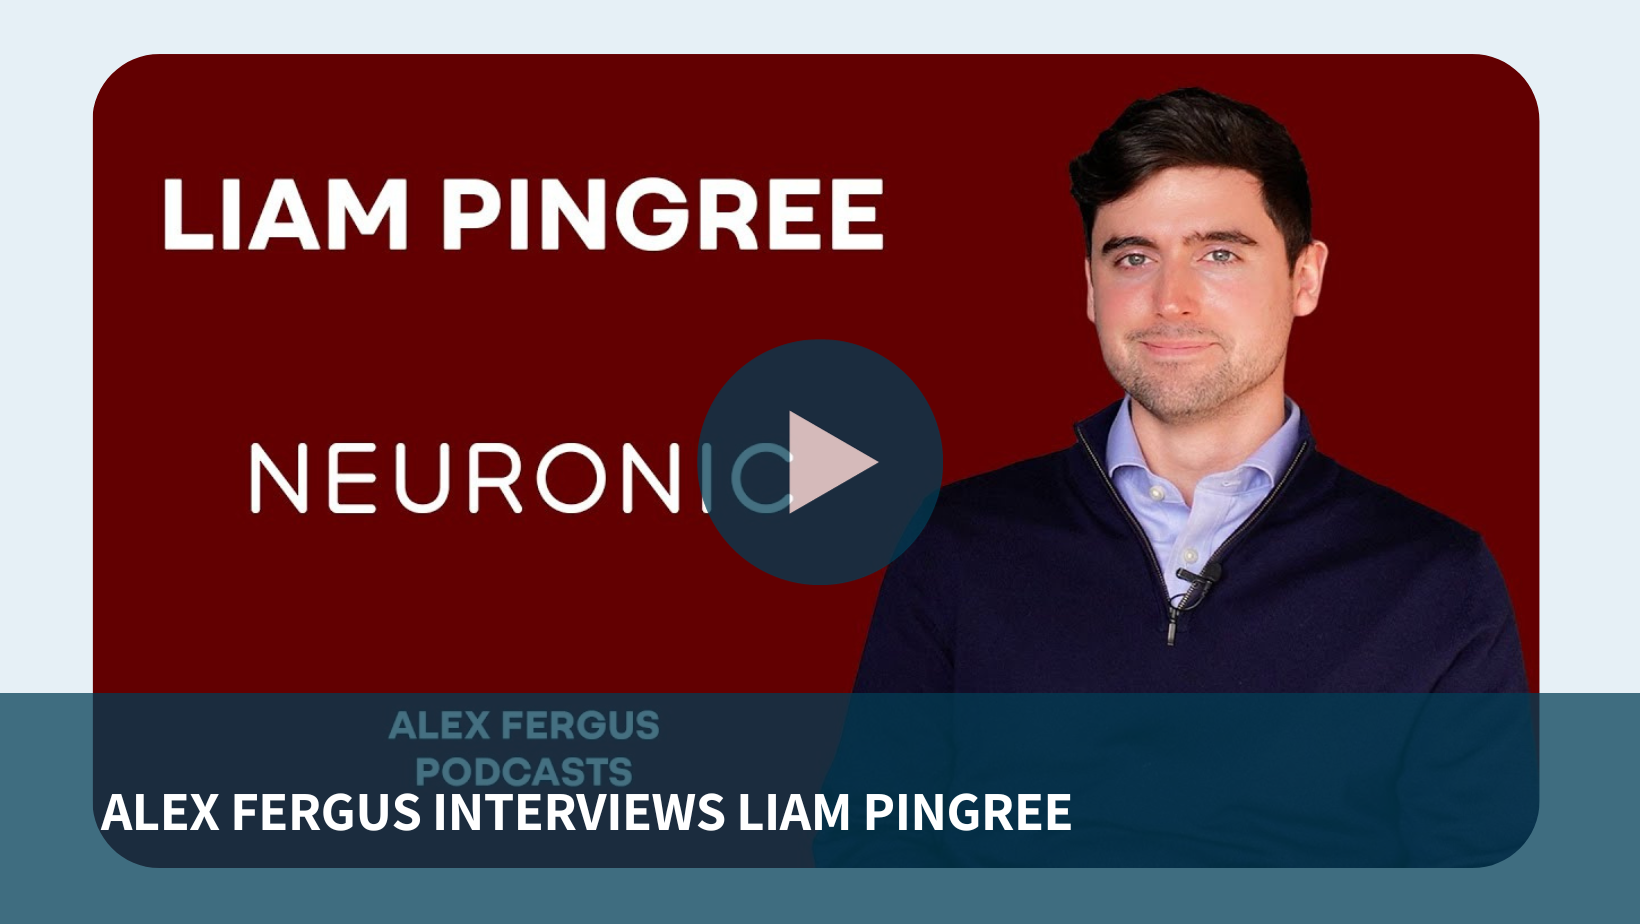 Alex Fergus interviews Neuronic's co-founder, Liam Pingree